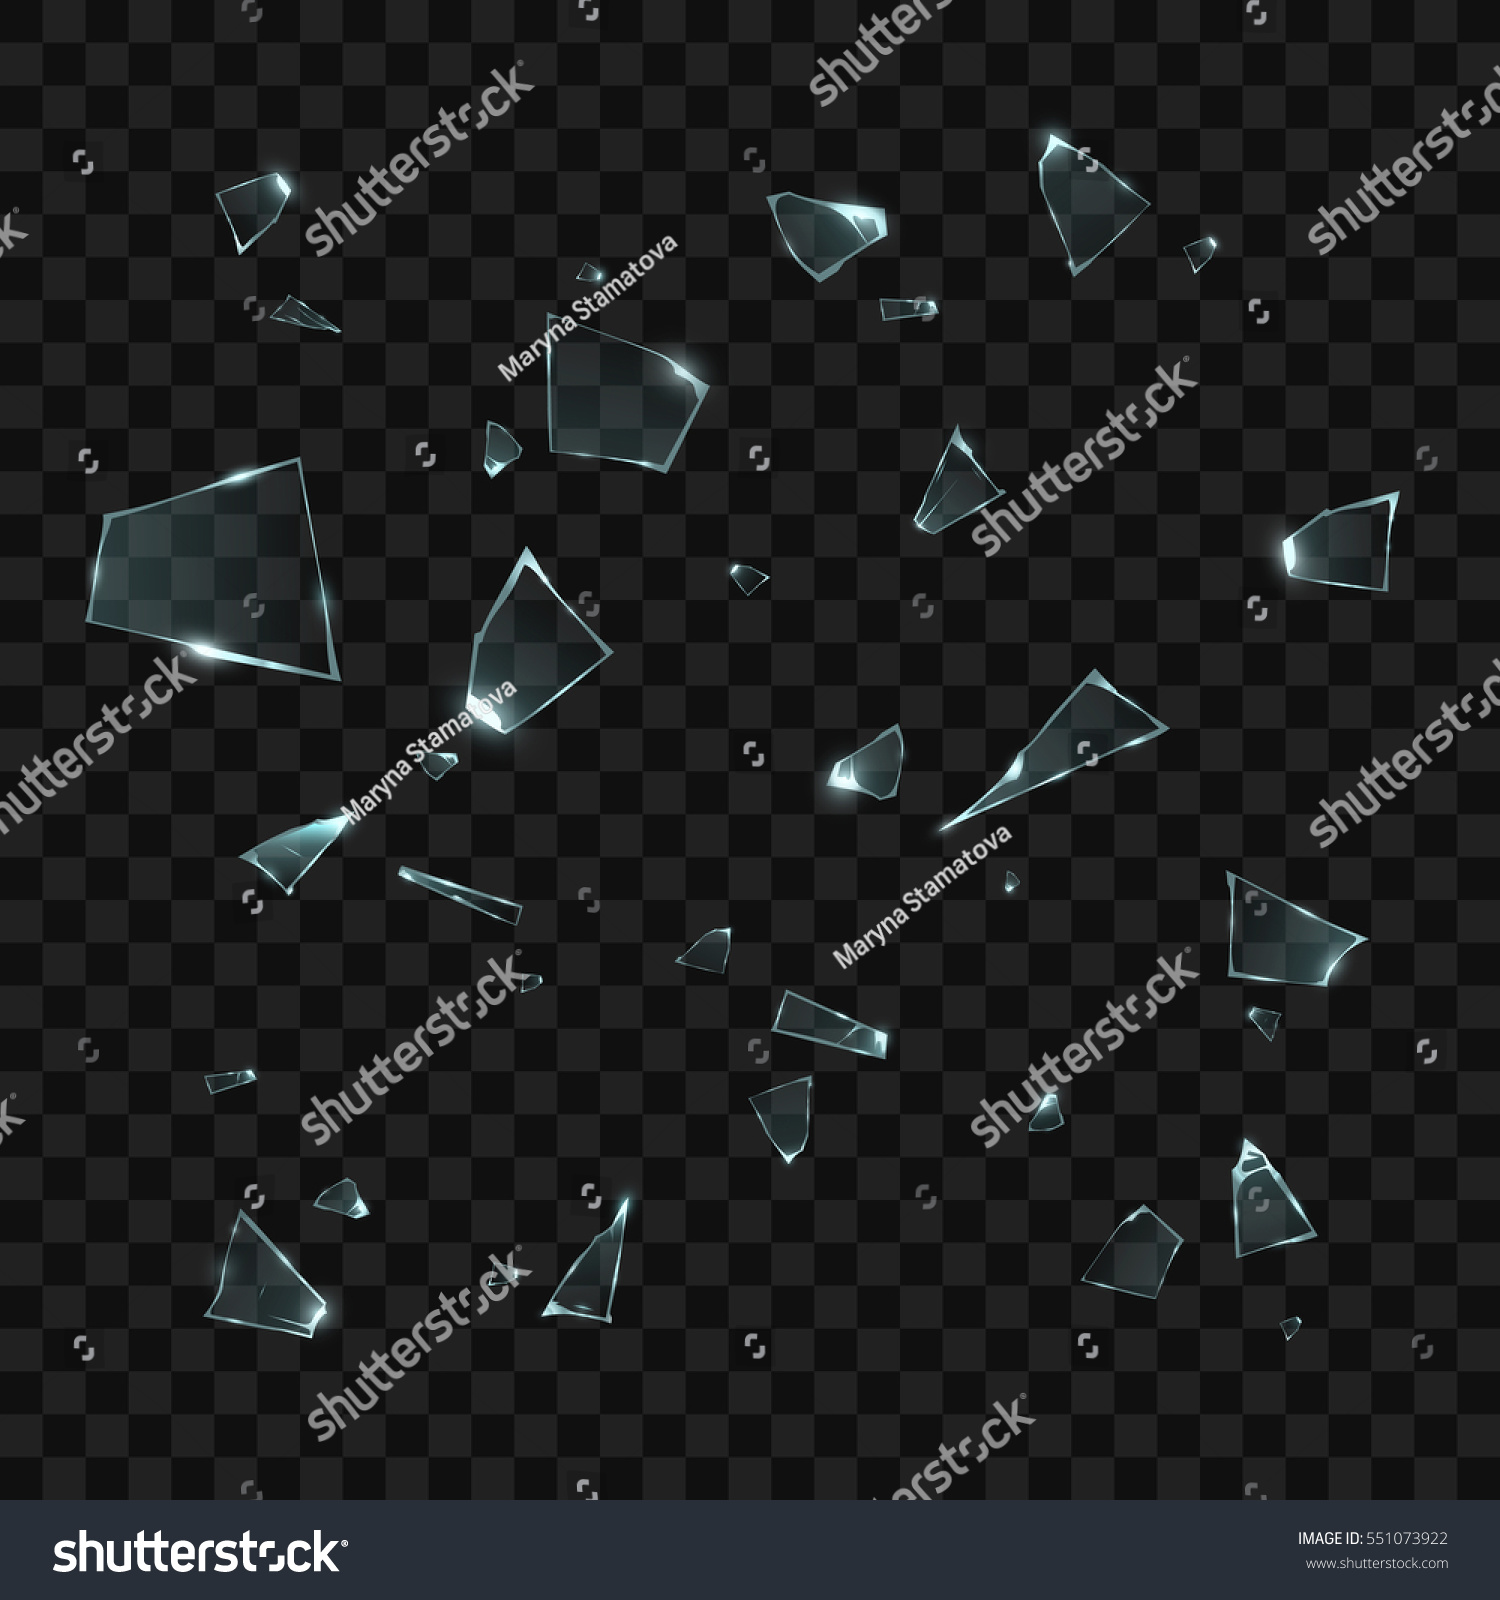 SVG of Broken glass pieces. Isolated on black transparent background. Vector illustration, eps 10.

 svg